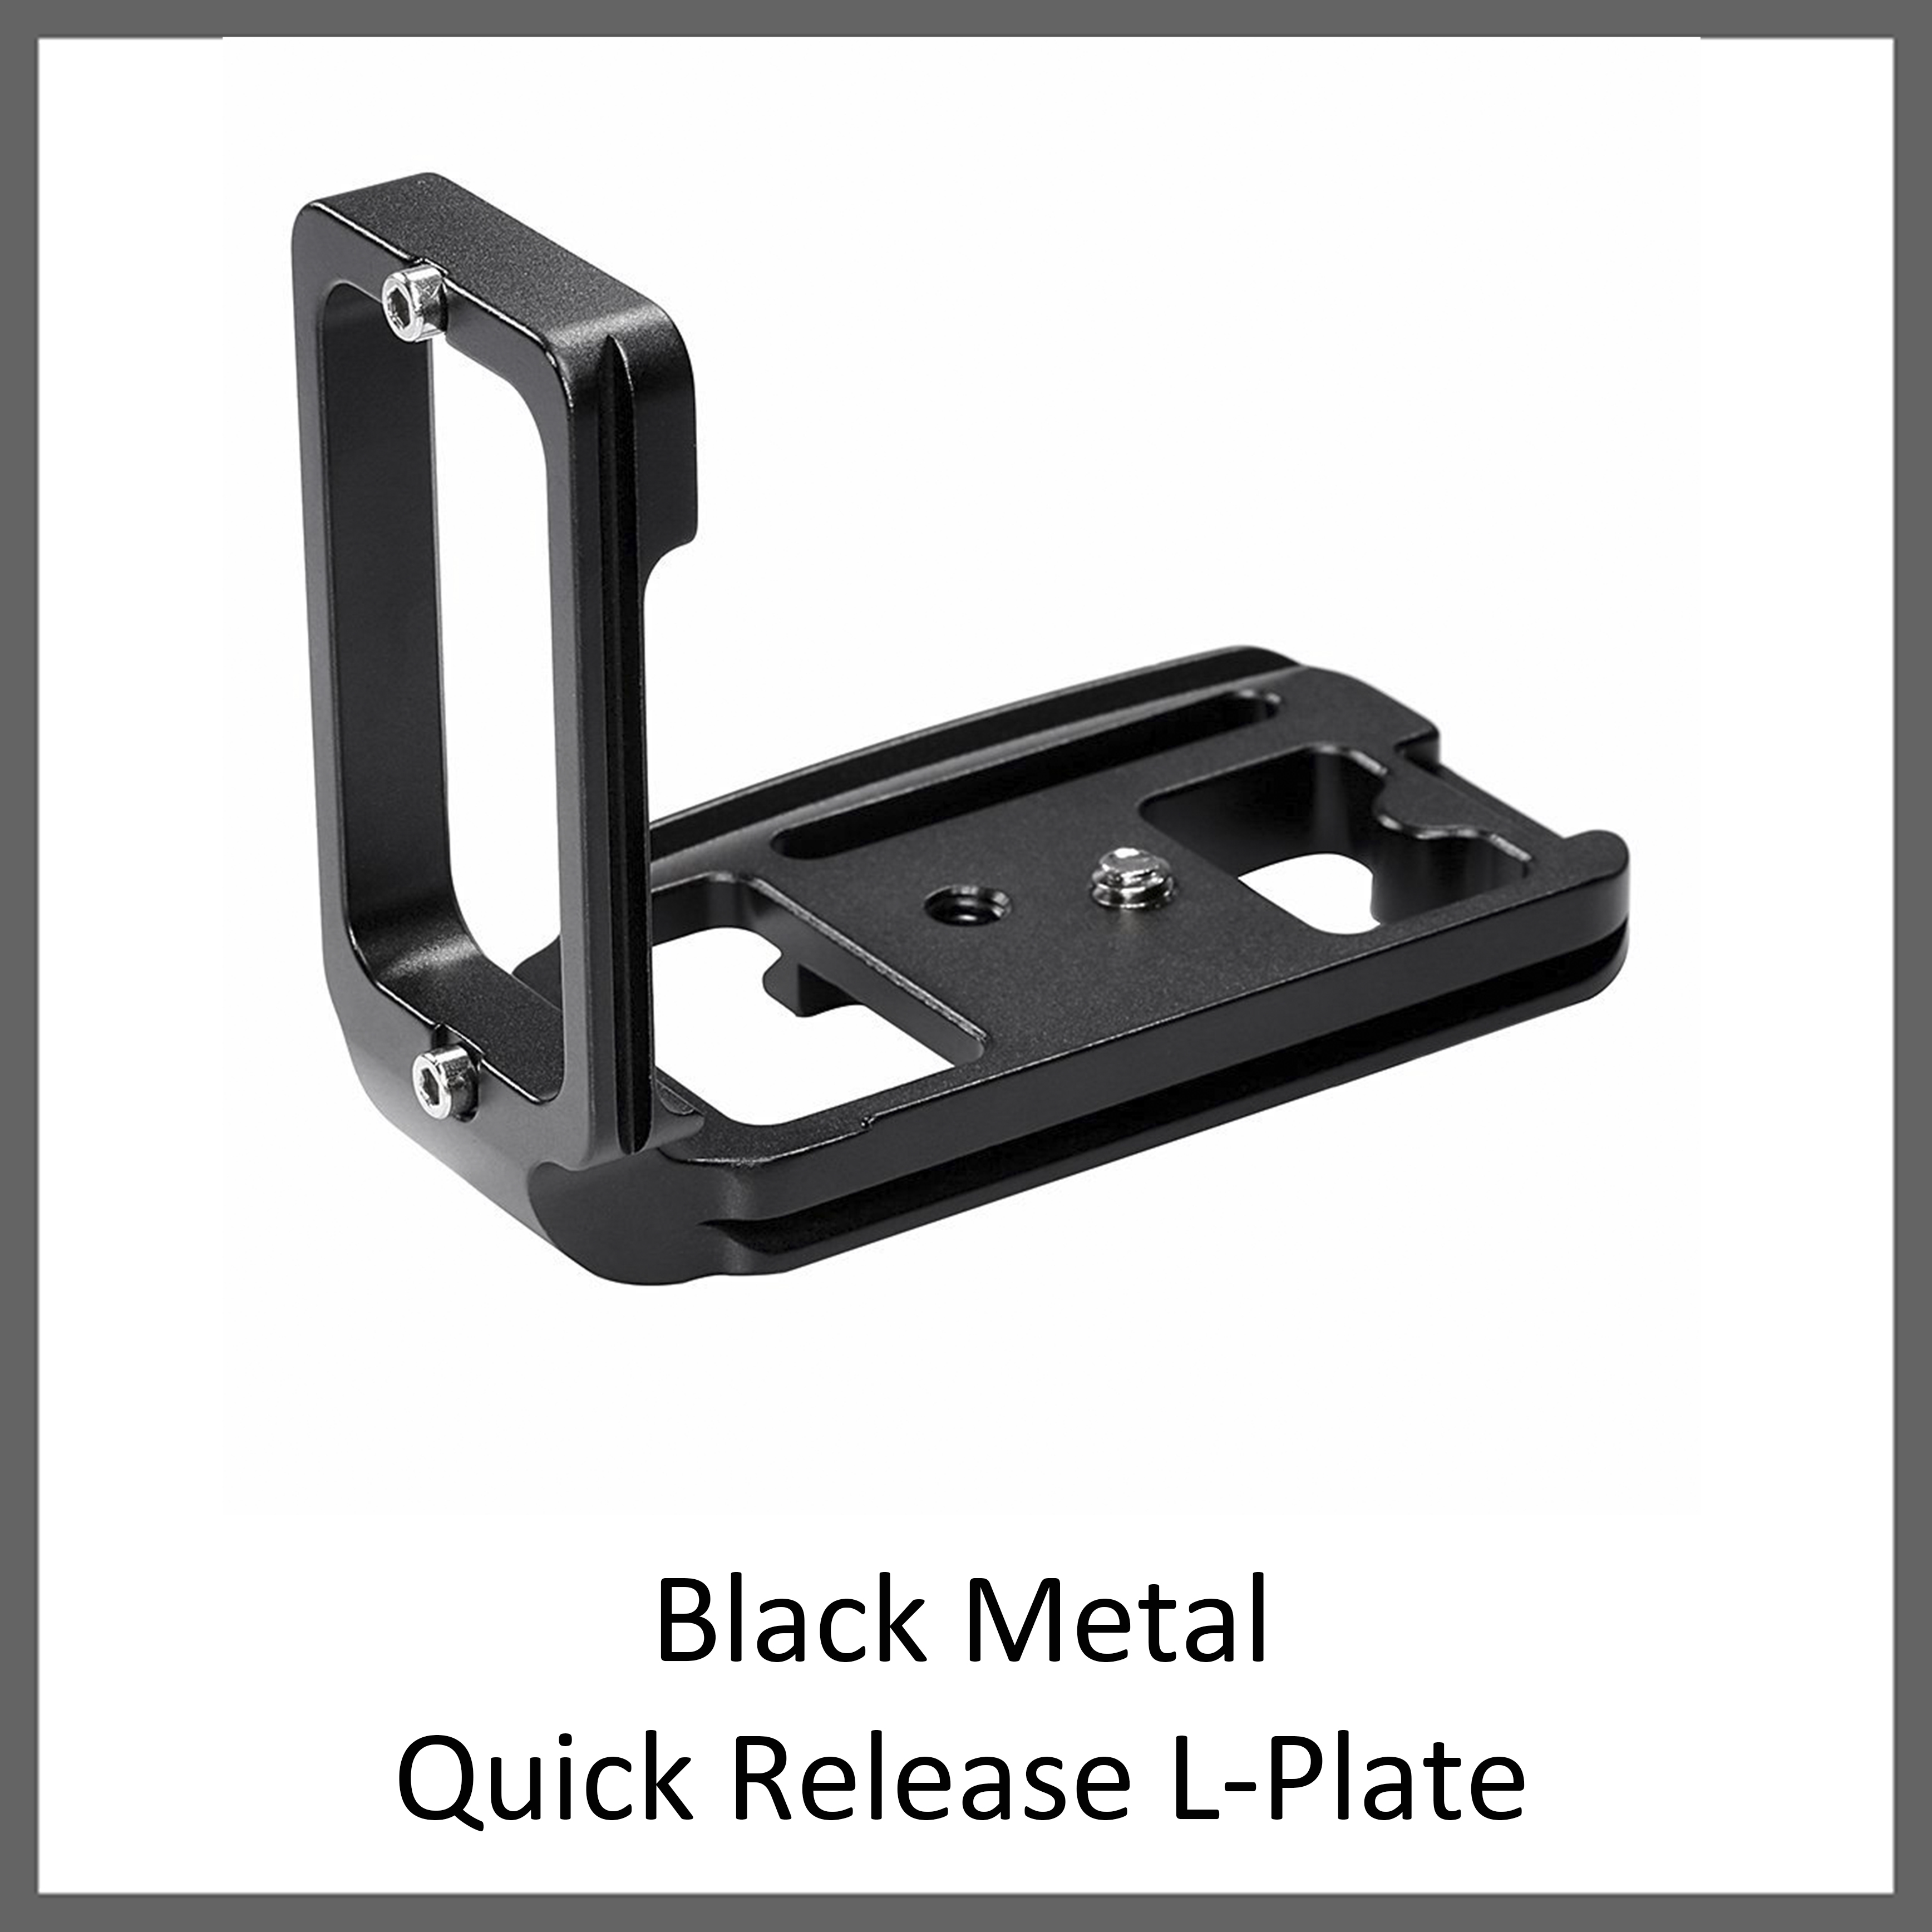 Black Metal Quick Release L-Plate